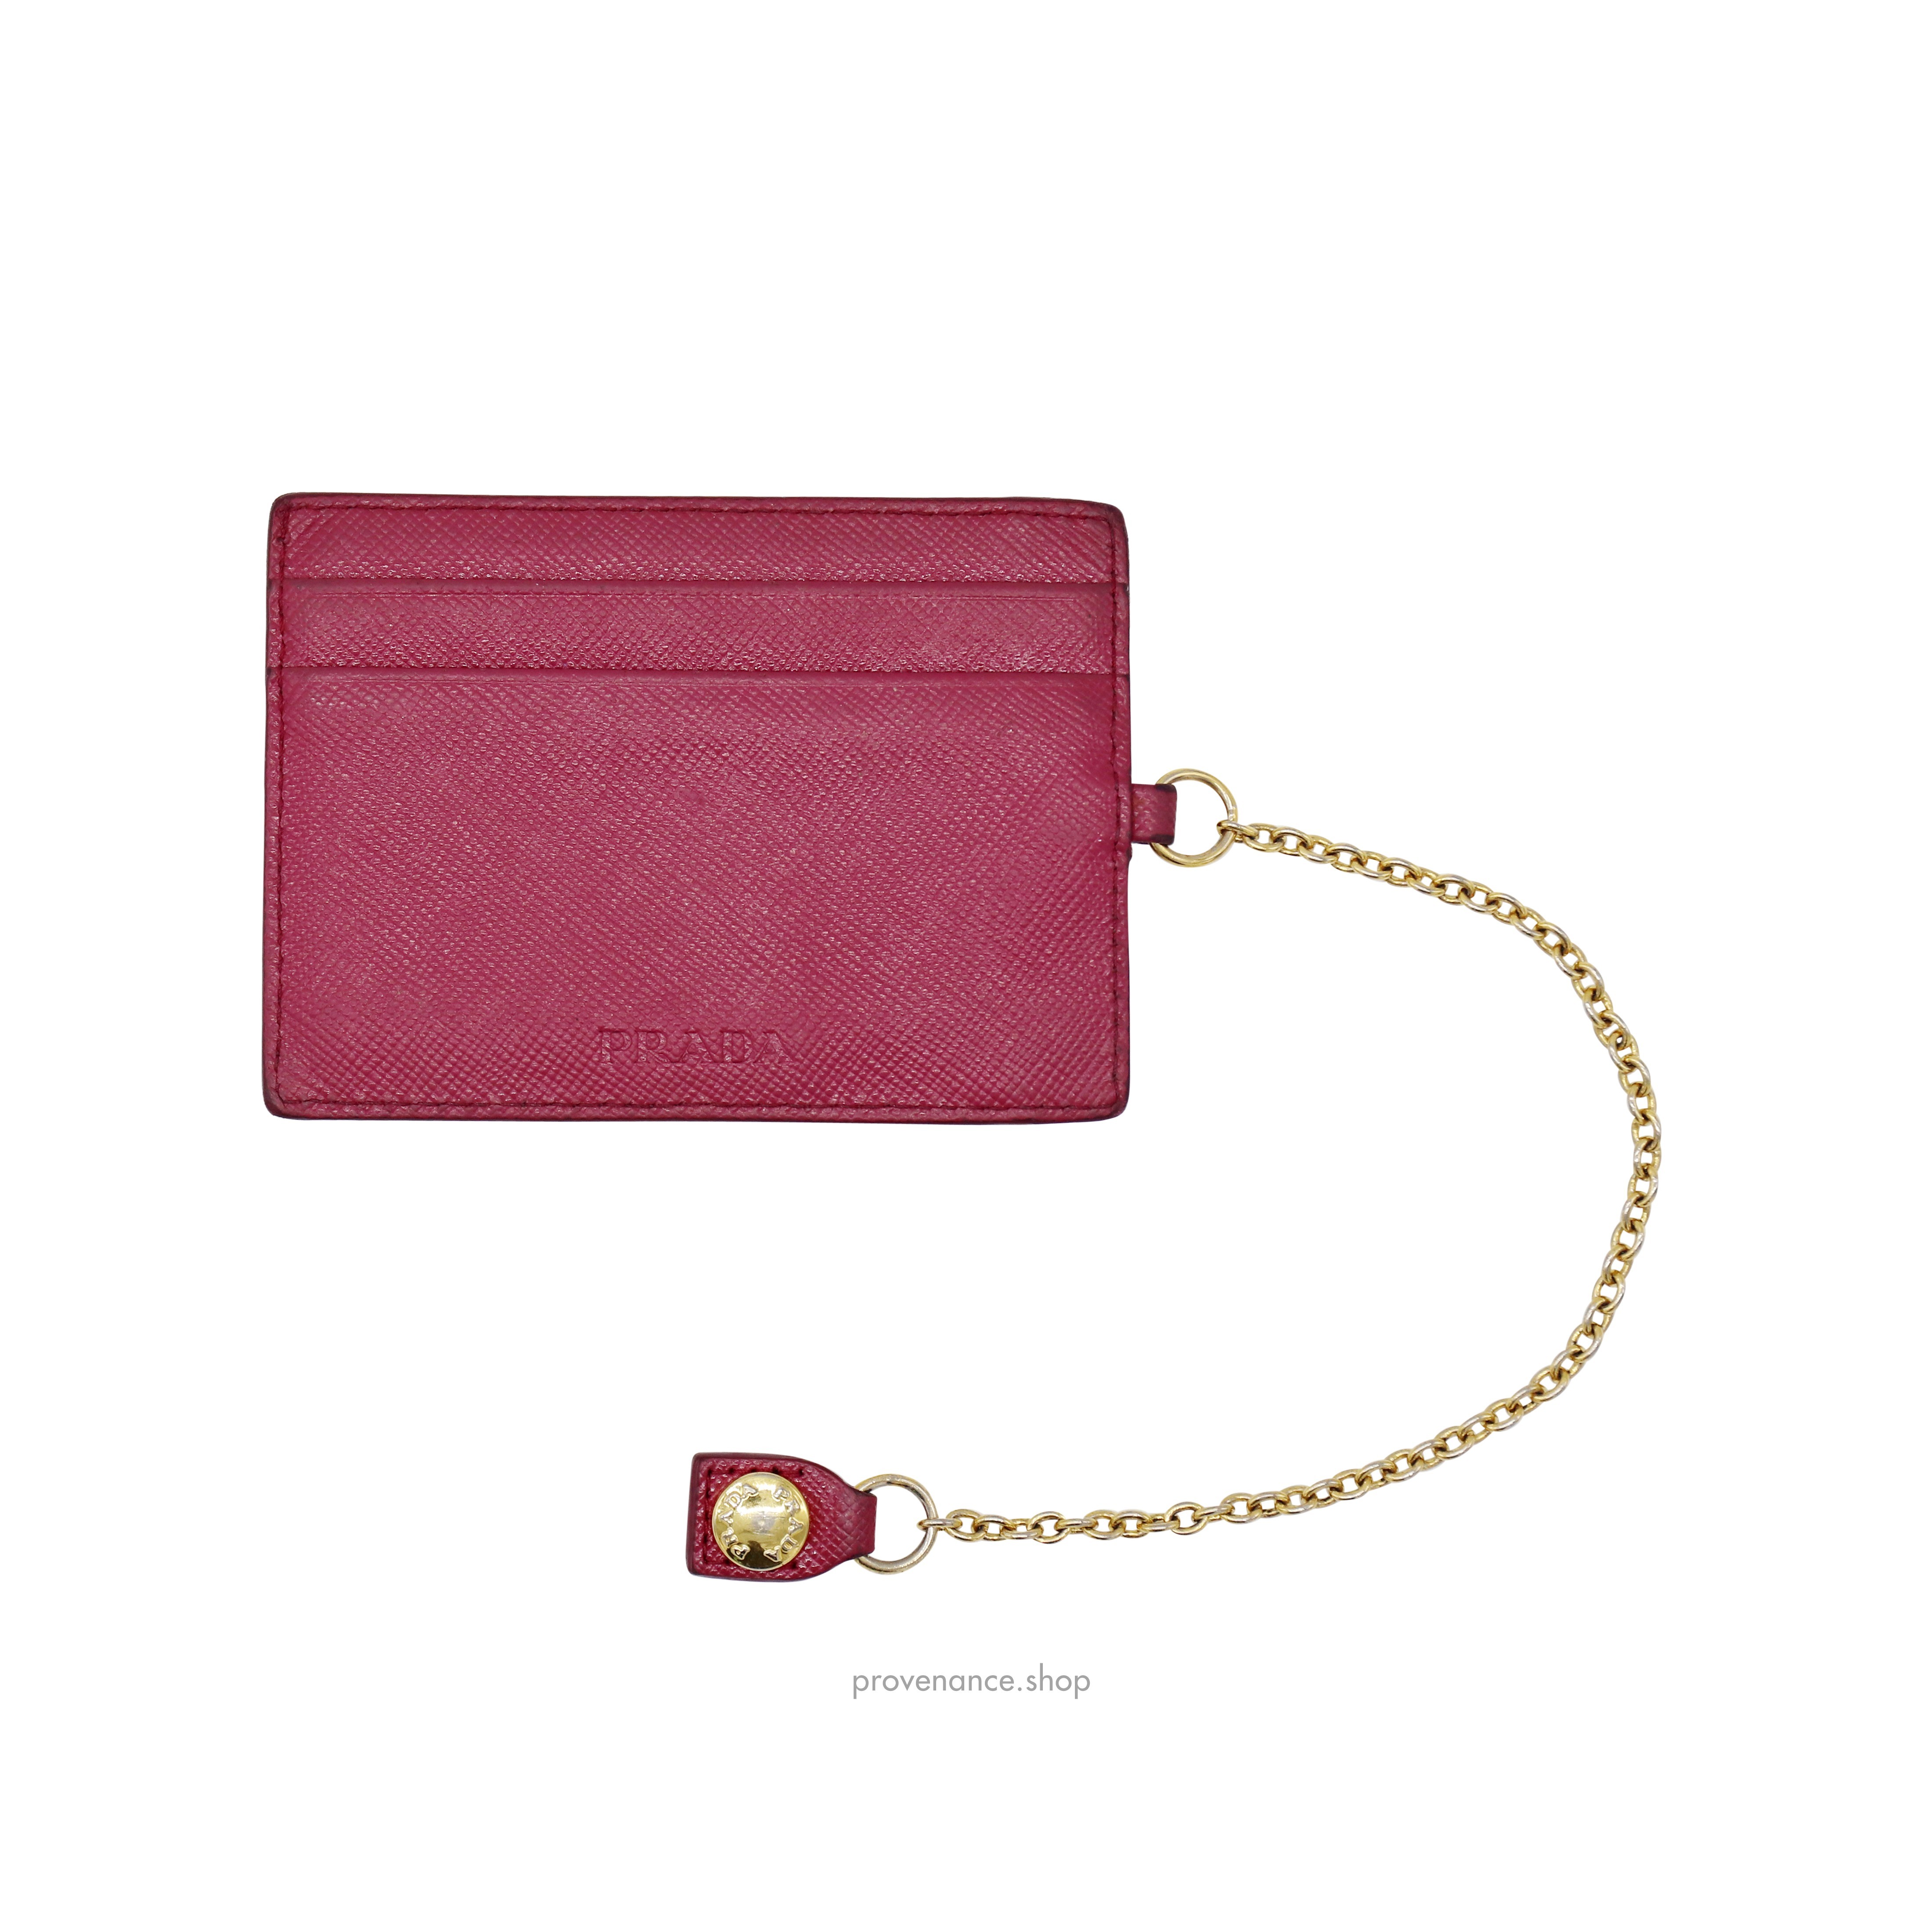 Prada Cardholder Wallet - Fuchsia Saffiano Leather - 1